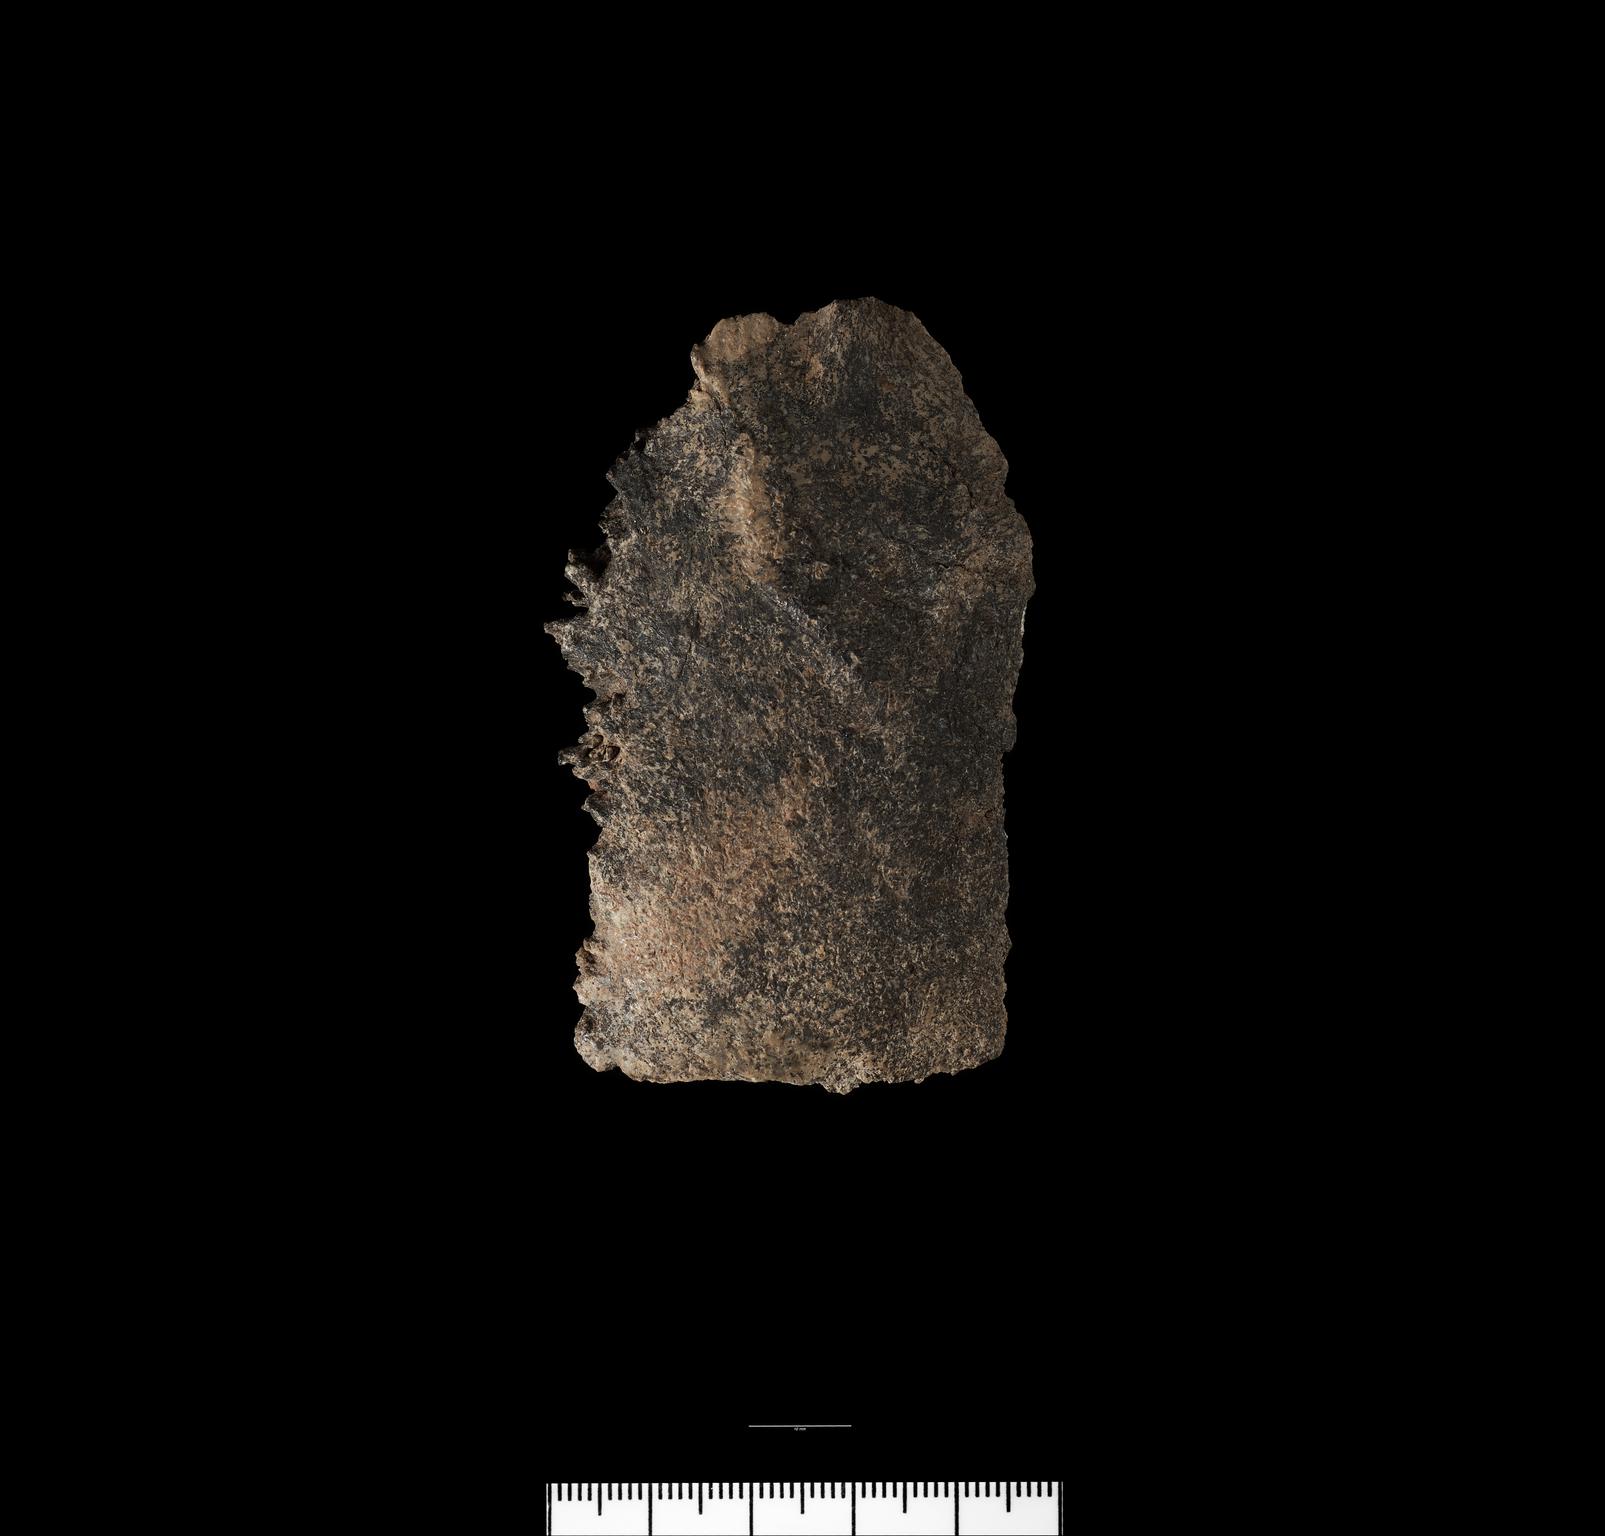 Prehistoric human bone